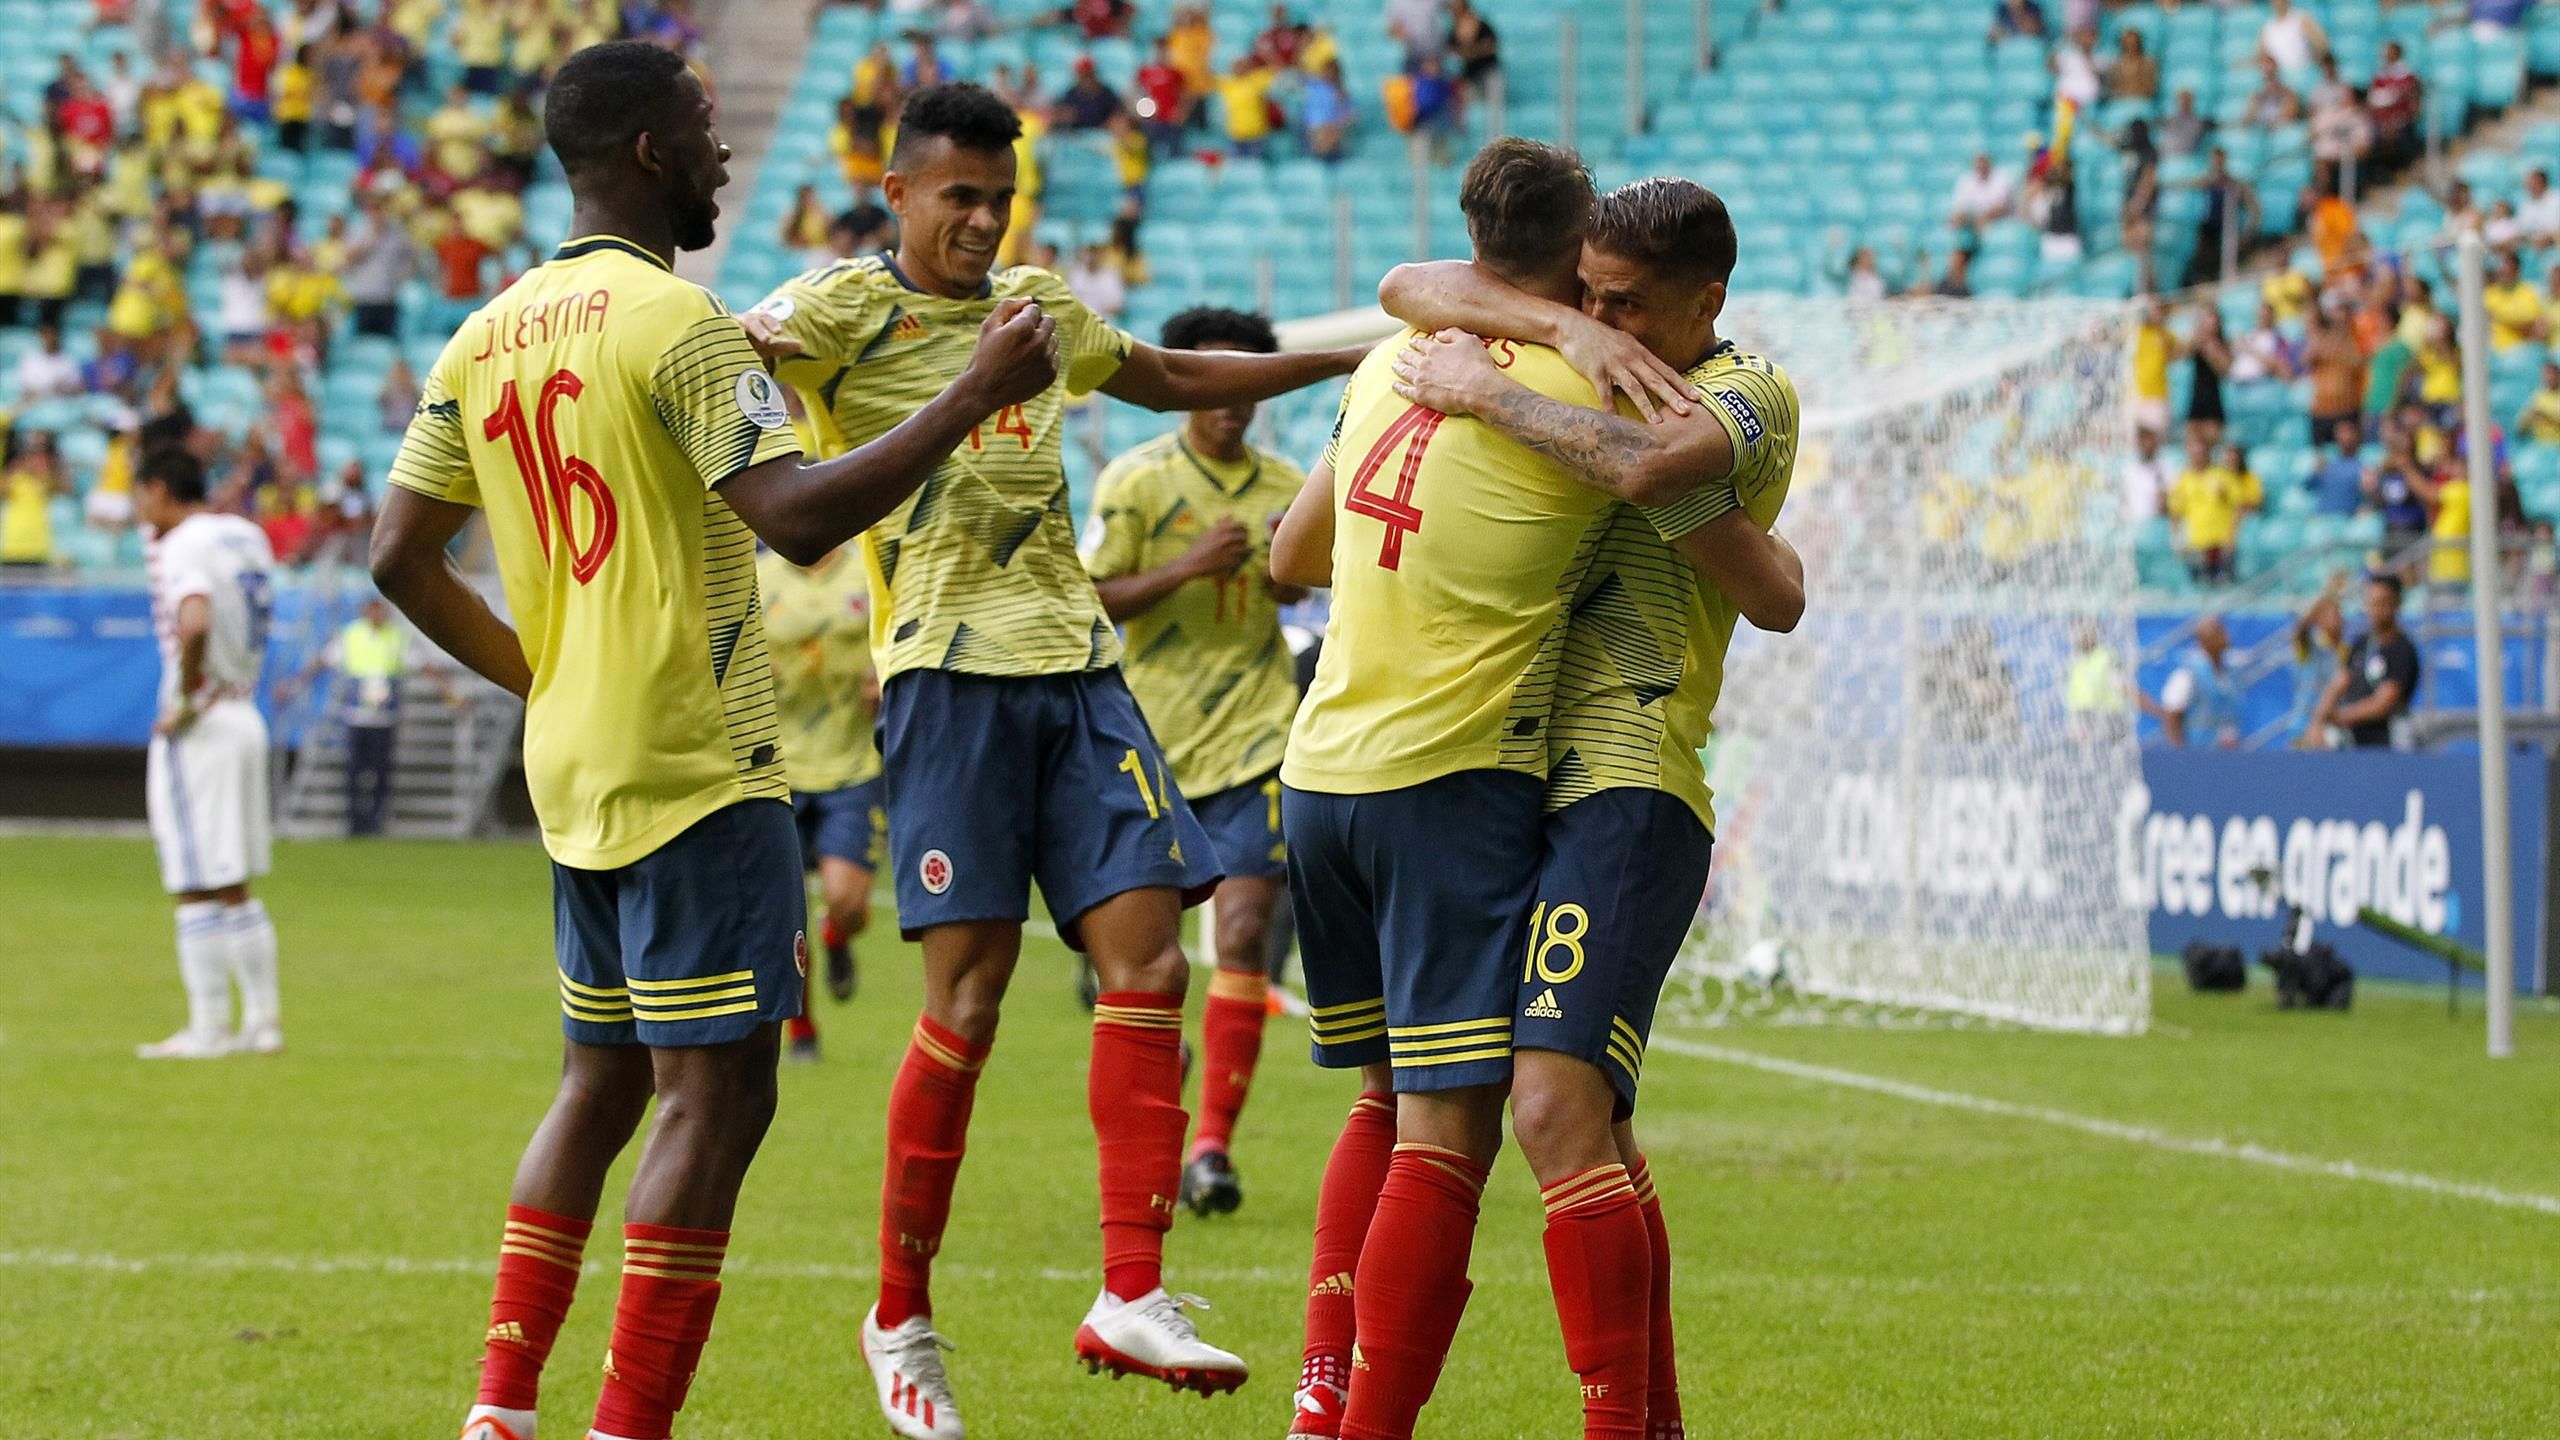 Colombia 🆚 Venezuela. Brazil 🆚 Peru. Who's picking up a W in @copaamerica  tonight?